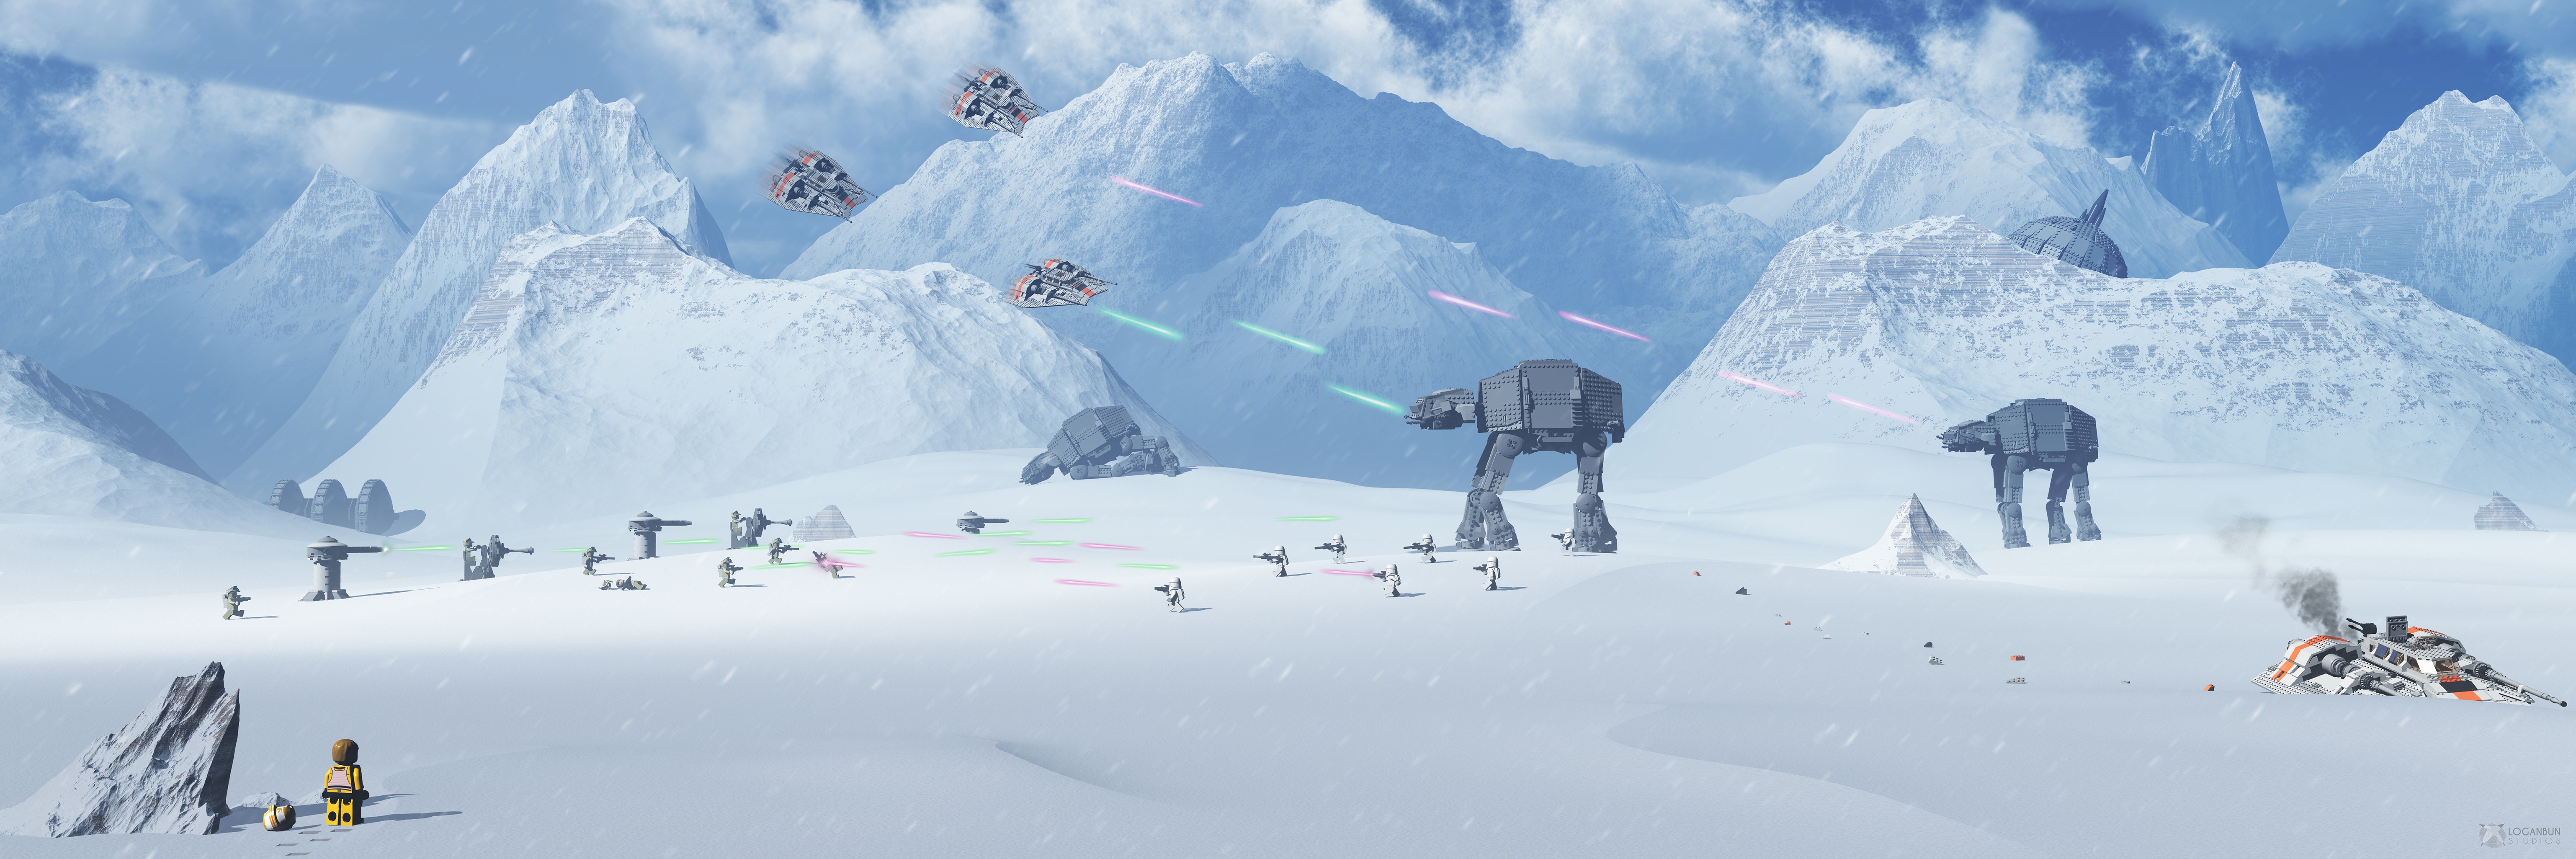 star-wars-lego-star-wars-battle-of-hoth-hoth-battle-atat-snow-artwork-wallpapers-hd